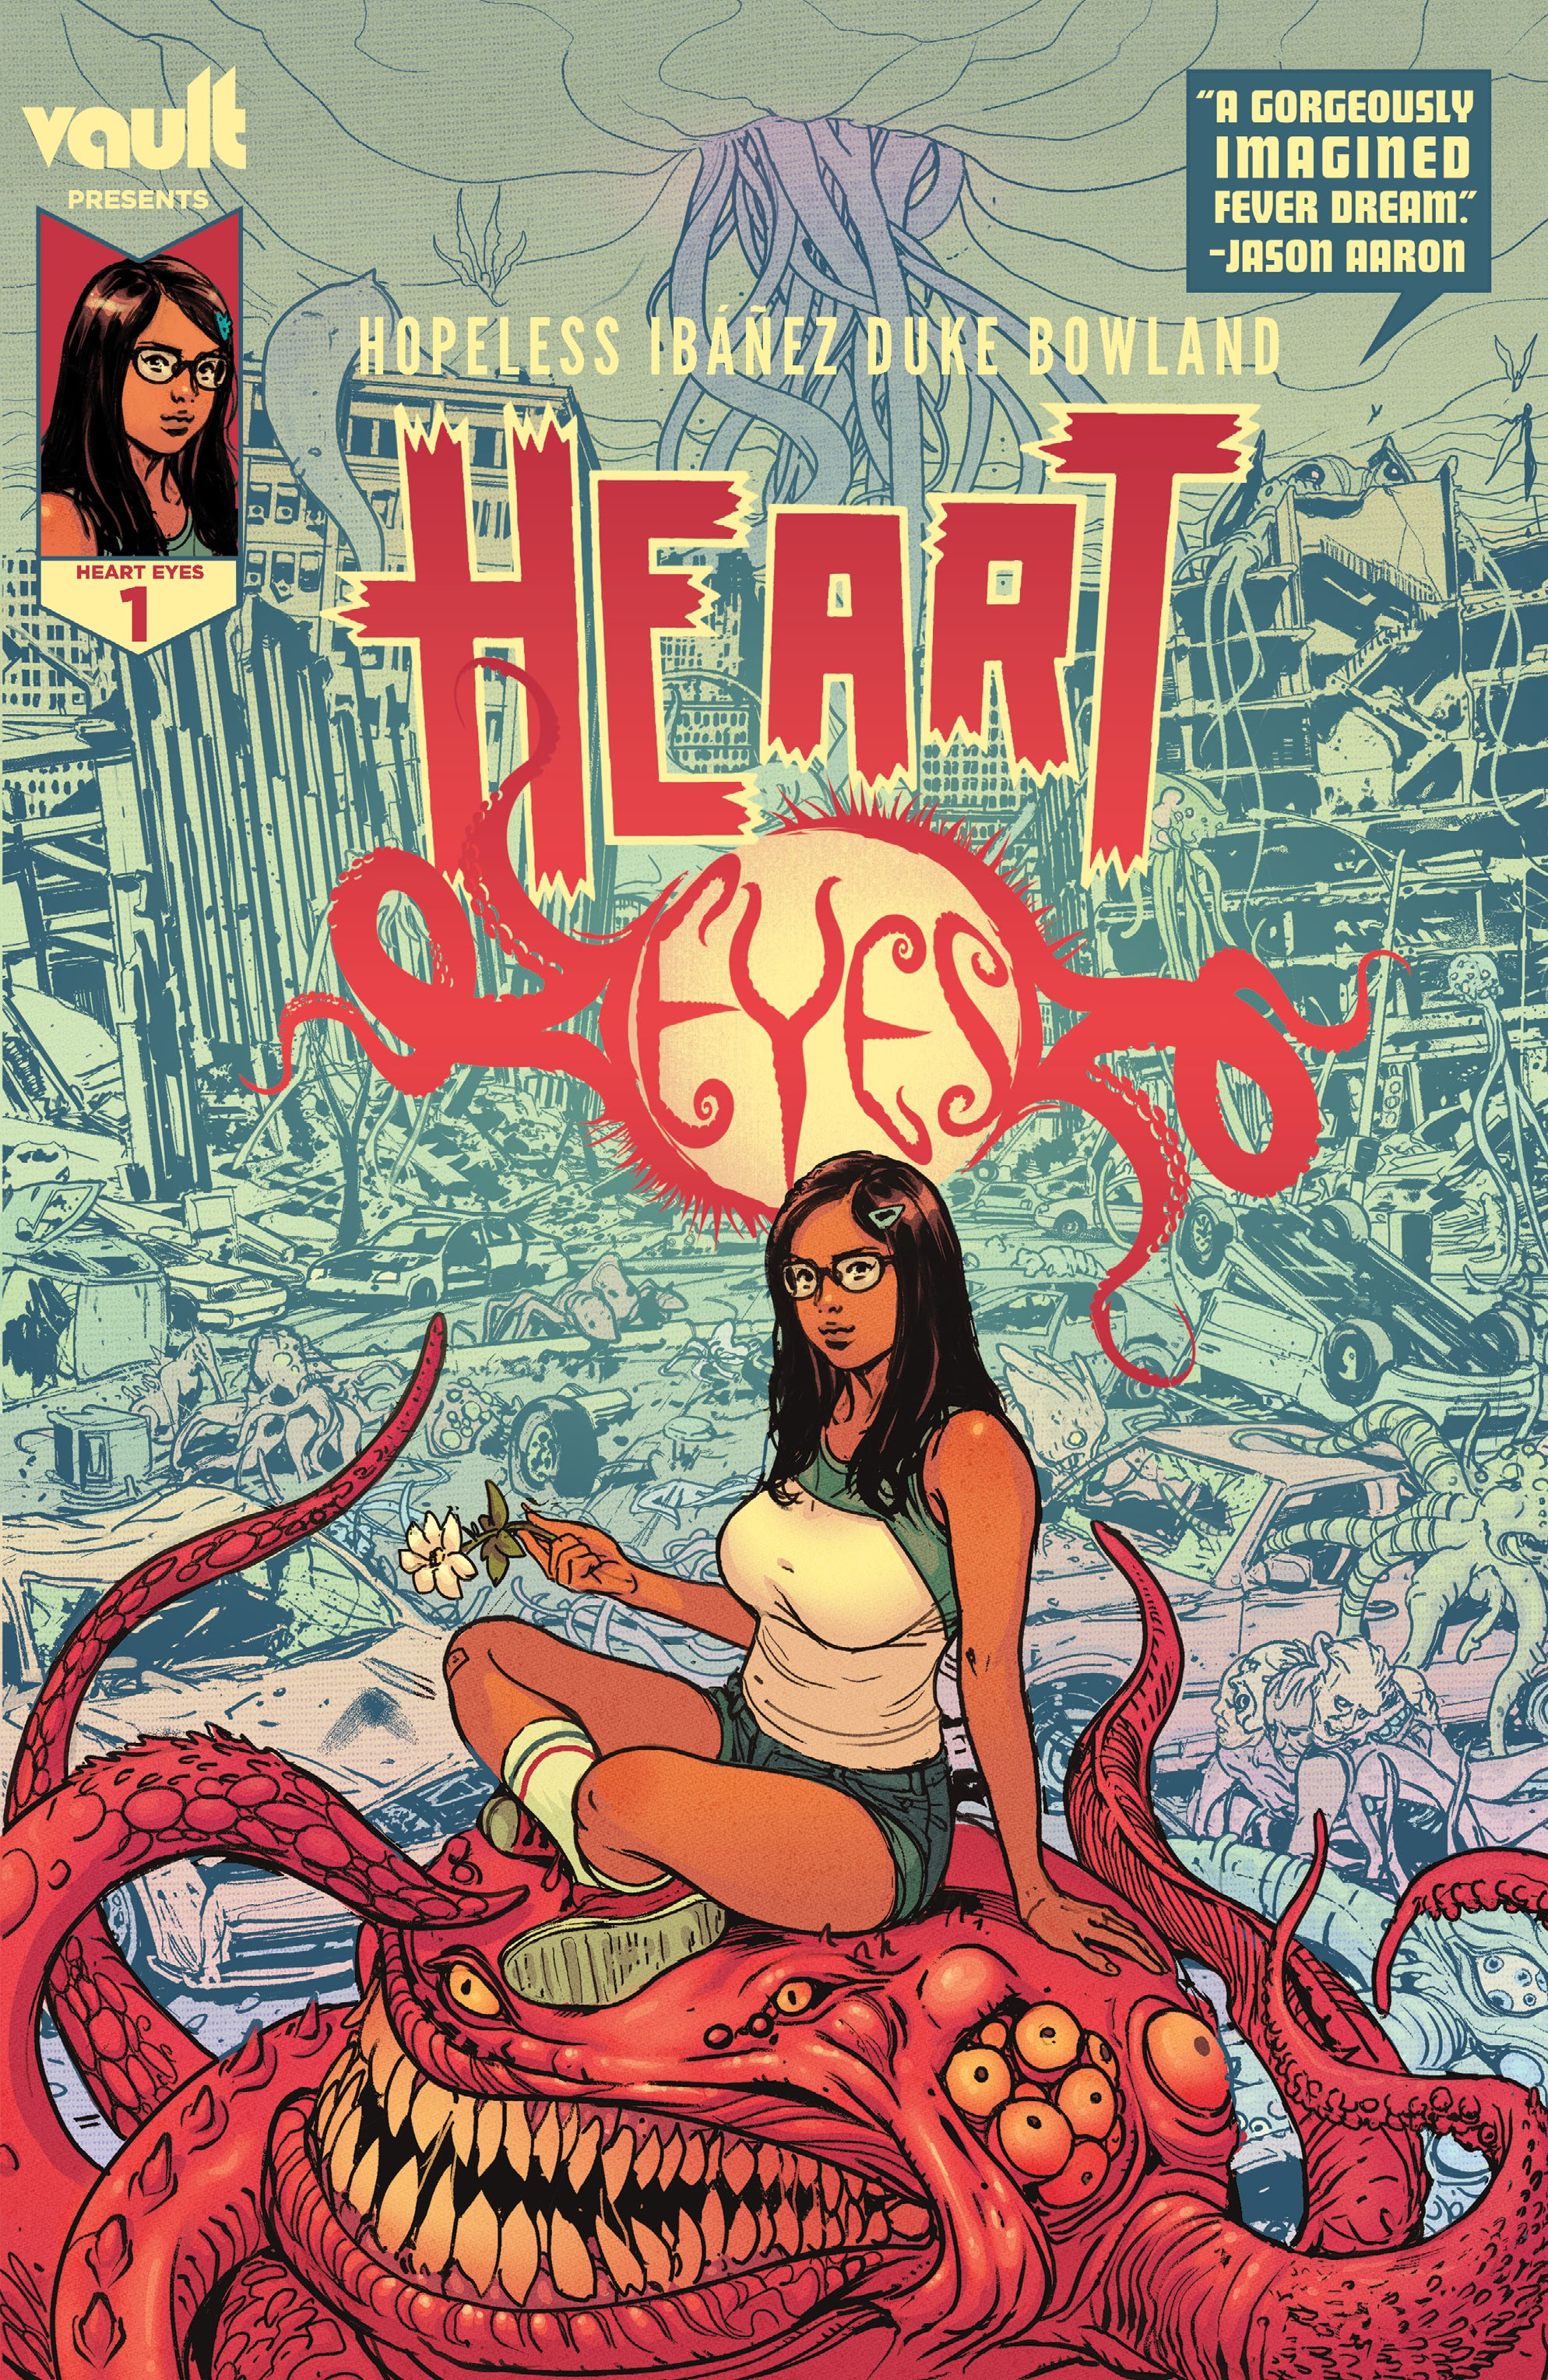 Read online Heart Eyes comic -  Issue #1 - 1